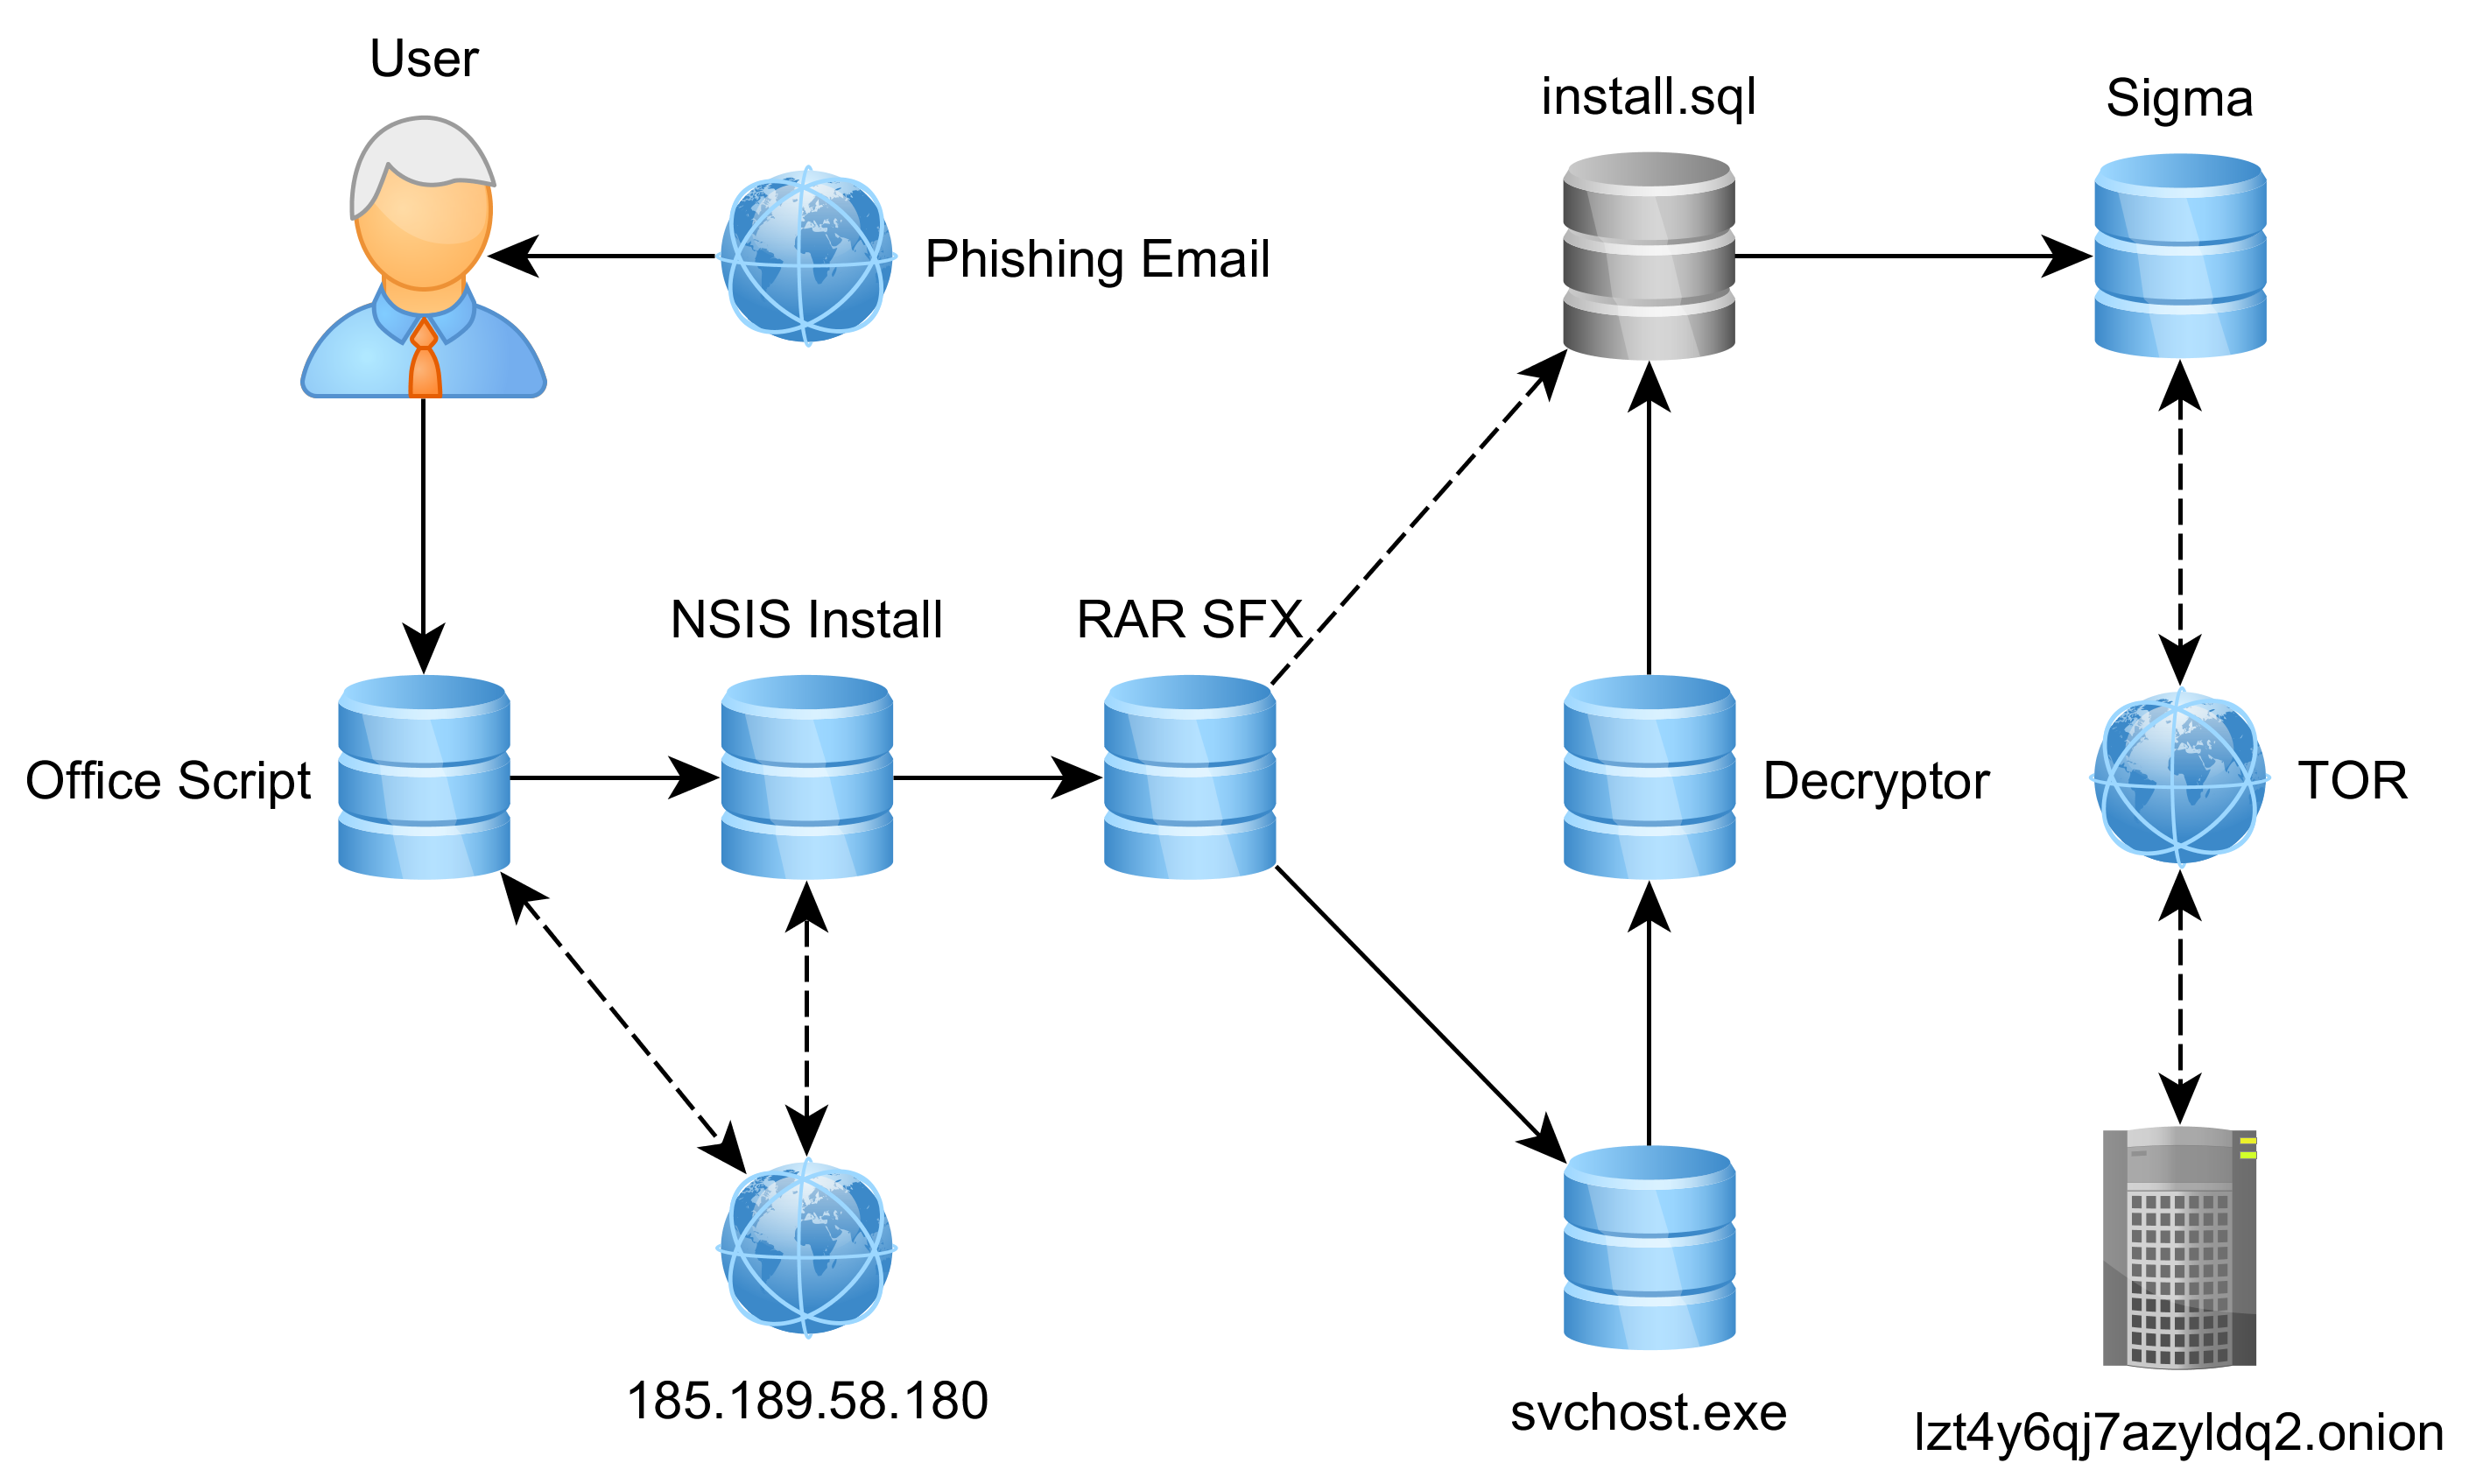 Funkcje ransomware Sigma